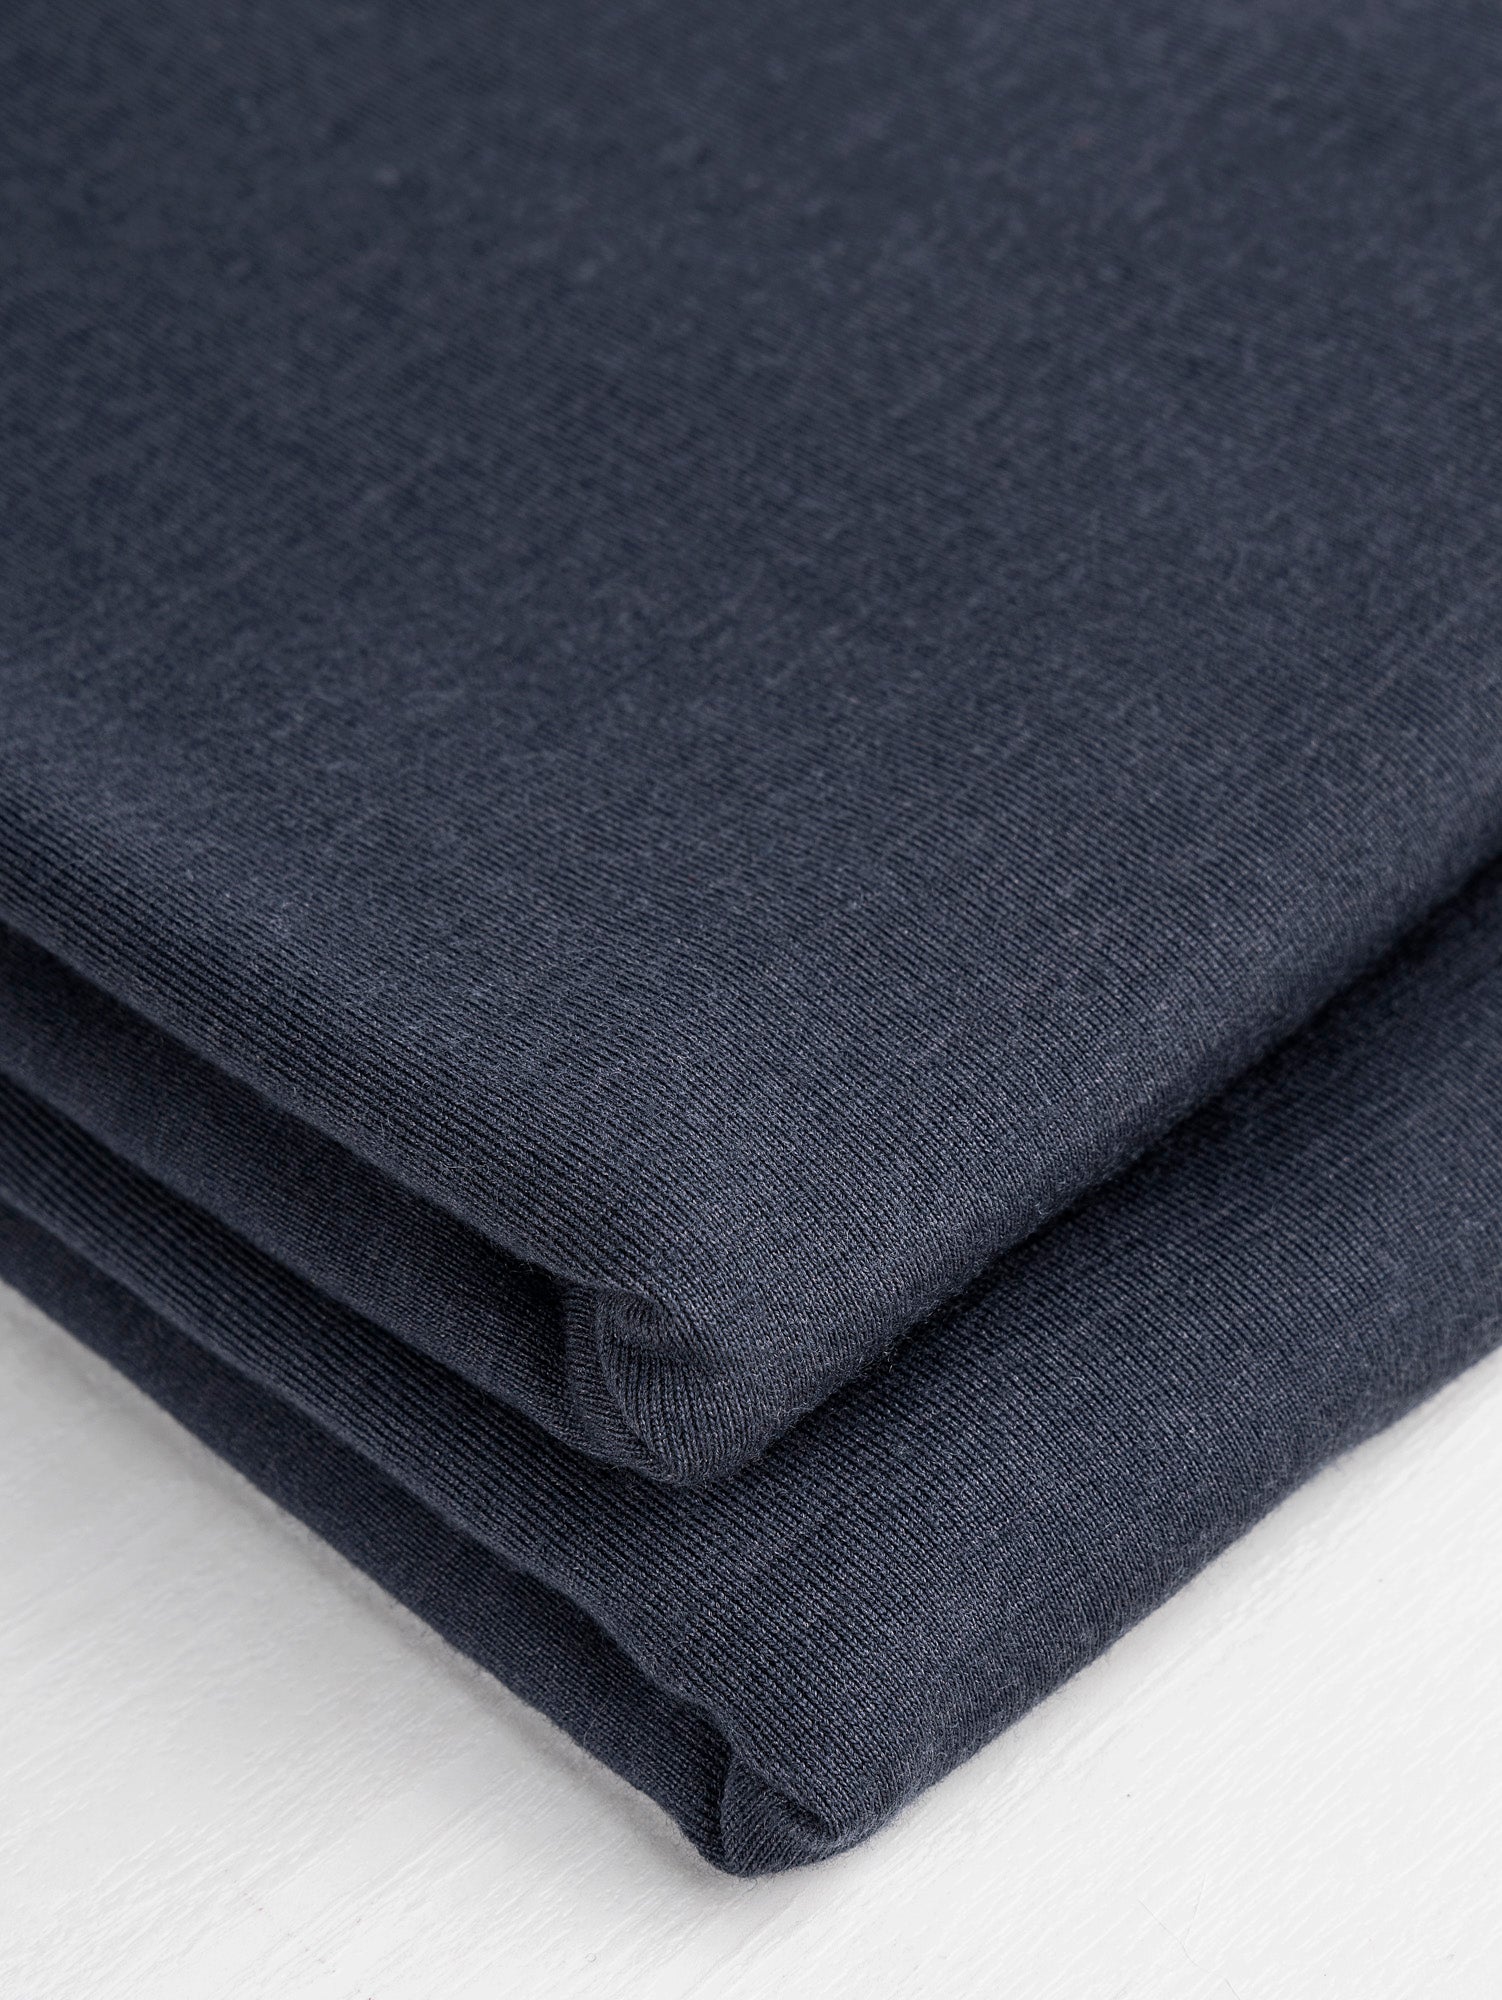 Merino Wool Blend Fabric With Lycra 4 Way Stretch Ponte Knit